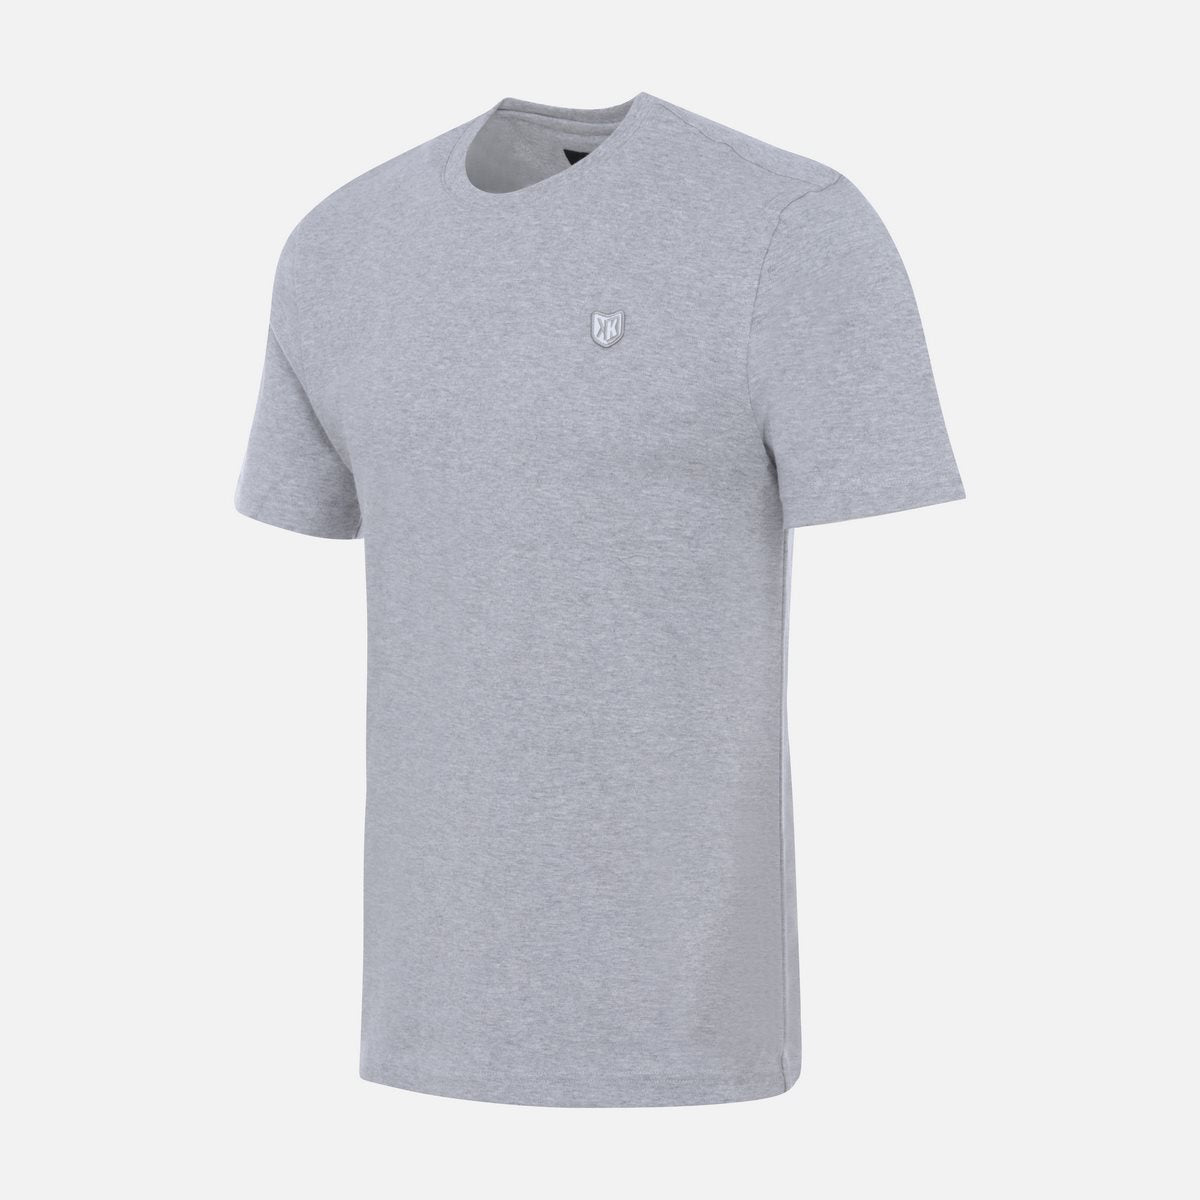 FK Basic T-Shirt - Gray